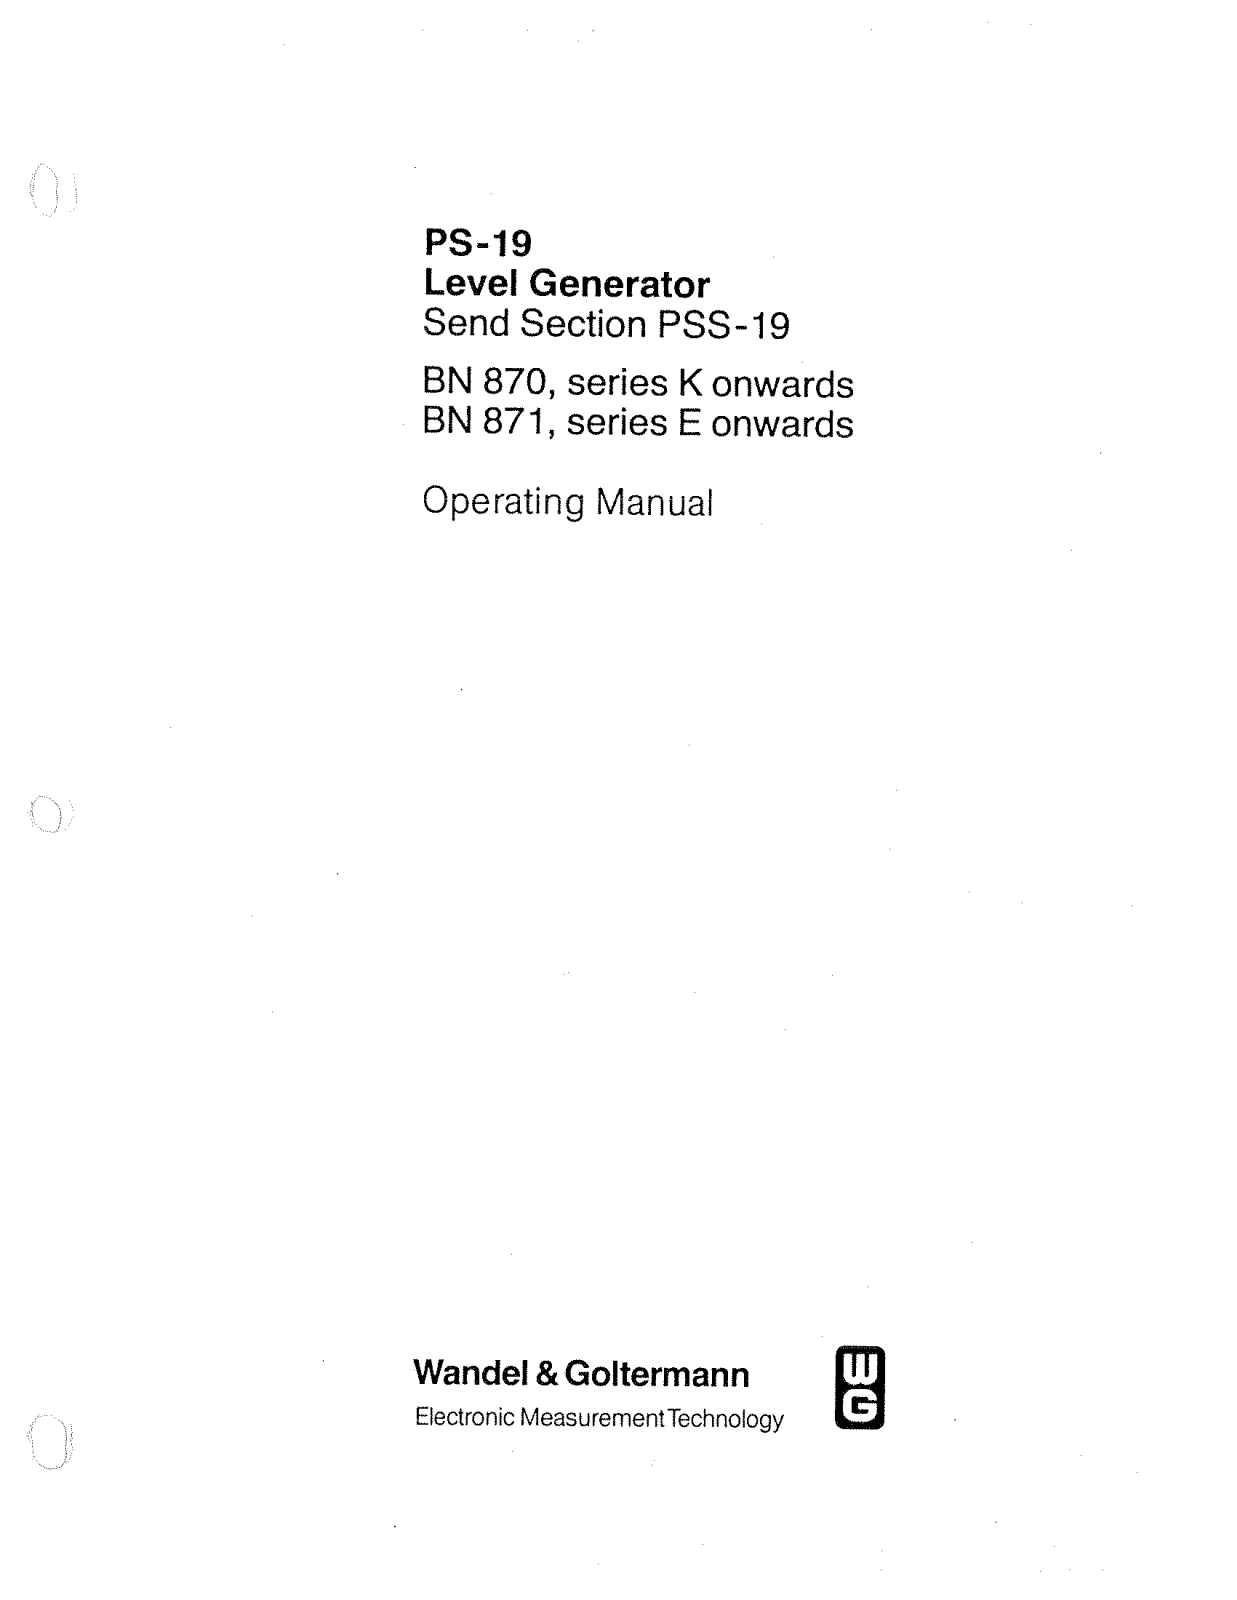 Wandel & Goltermann PSS-19, PS-19 User Manual